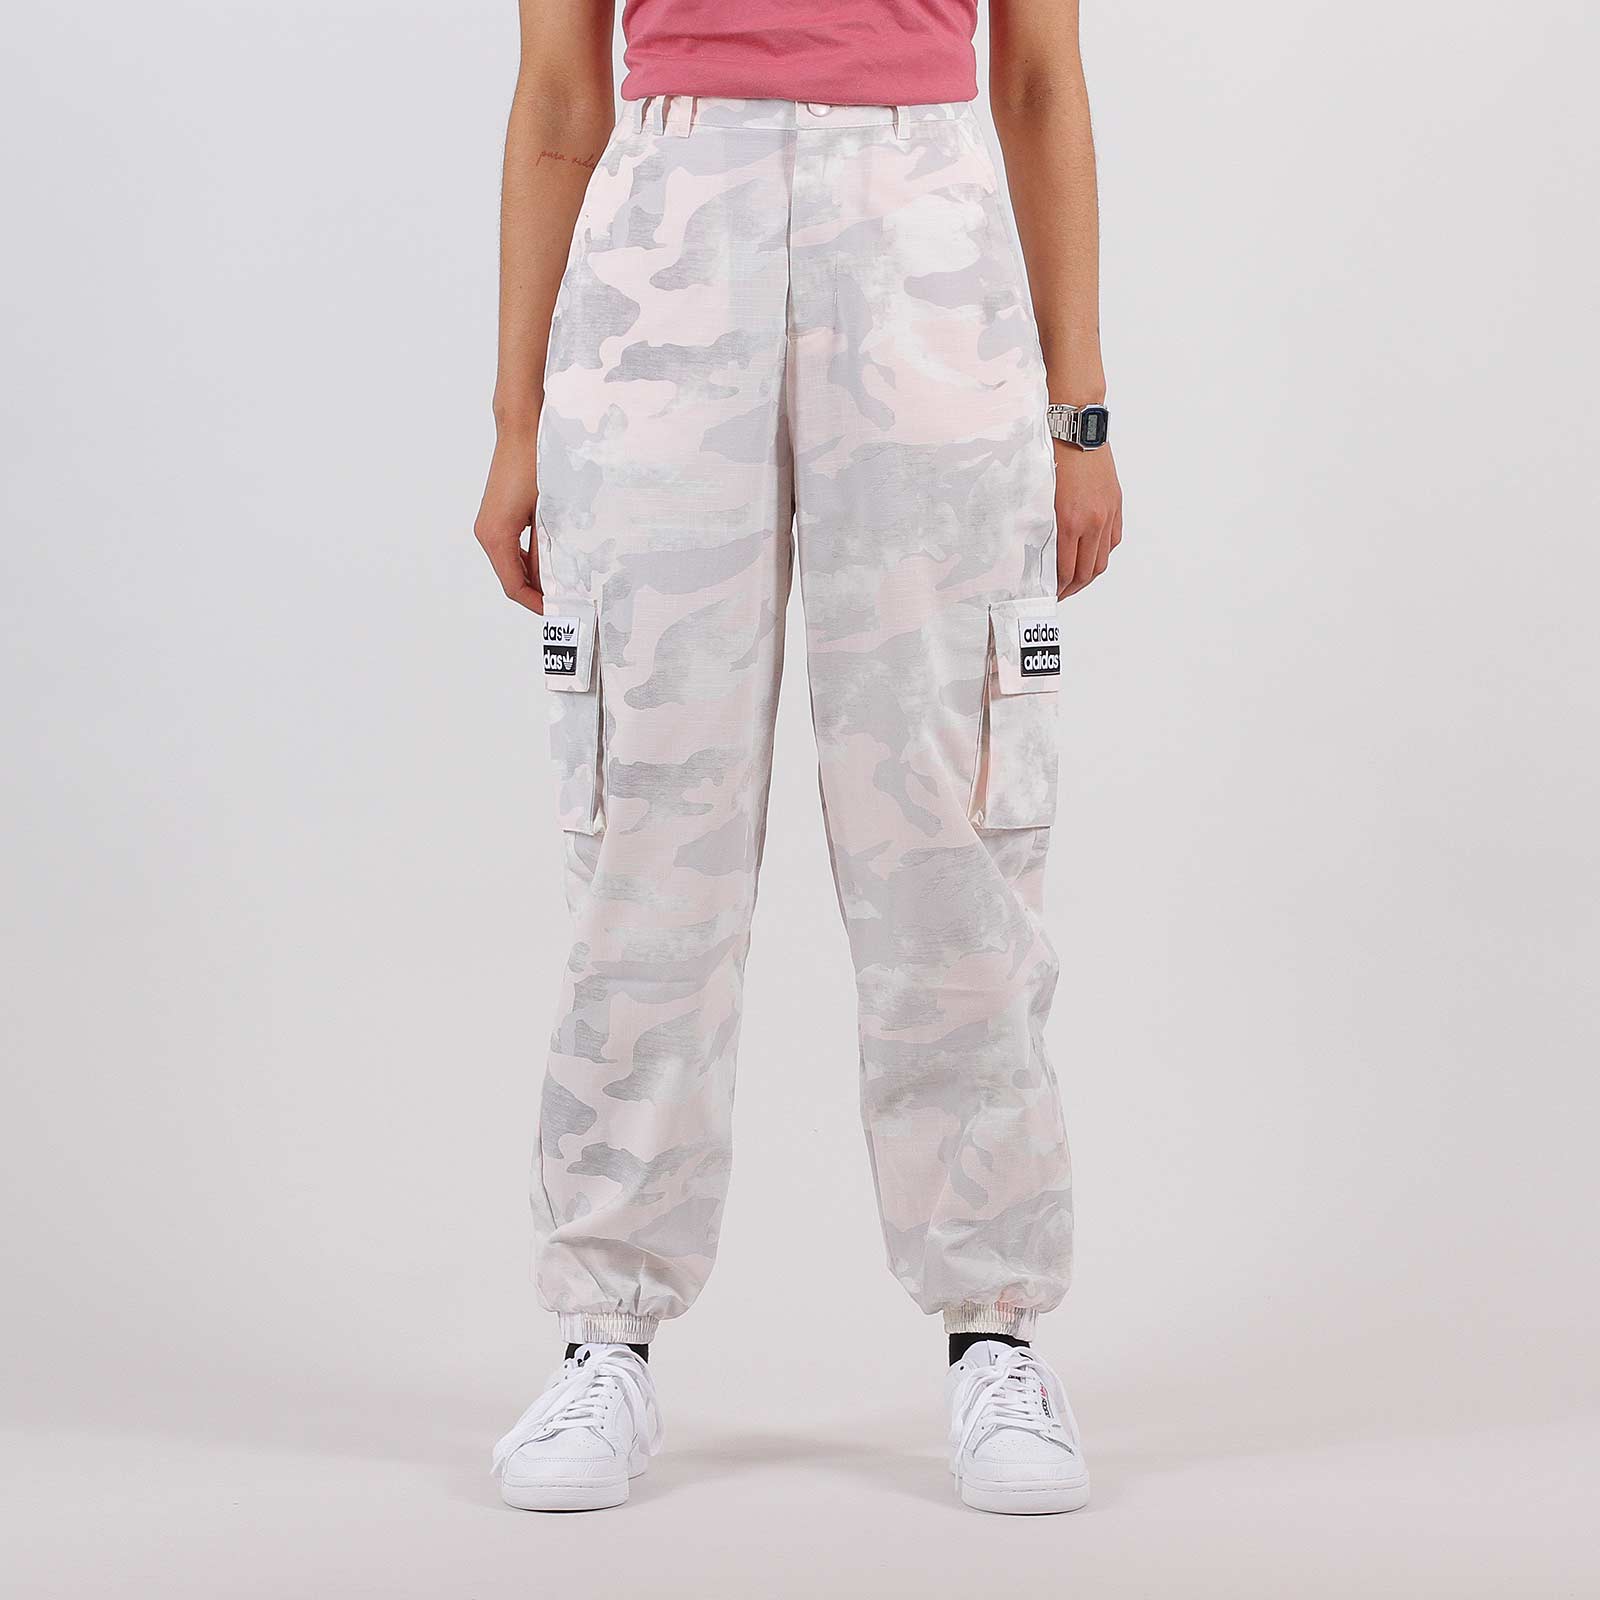 Adidas Originals Womens Pant Pink Camo 